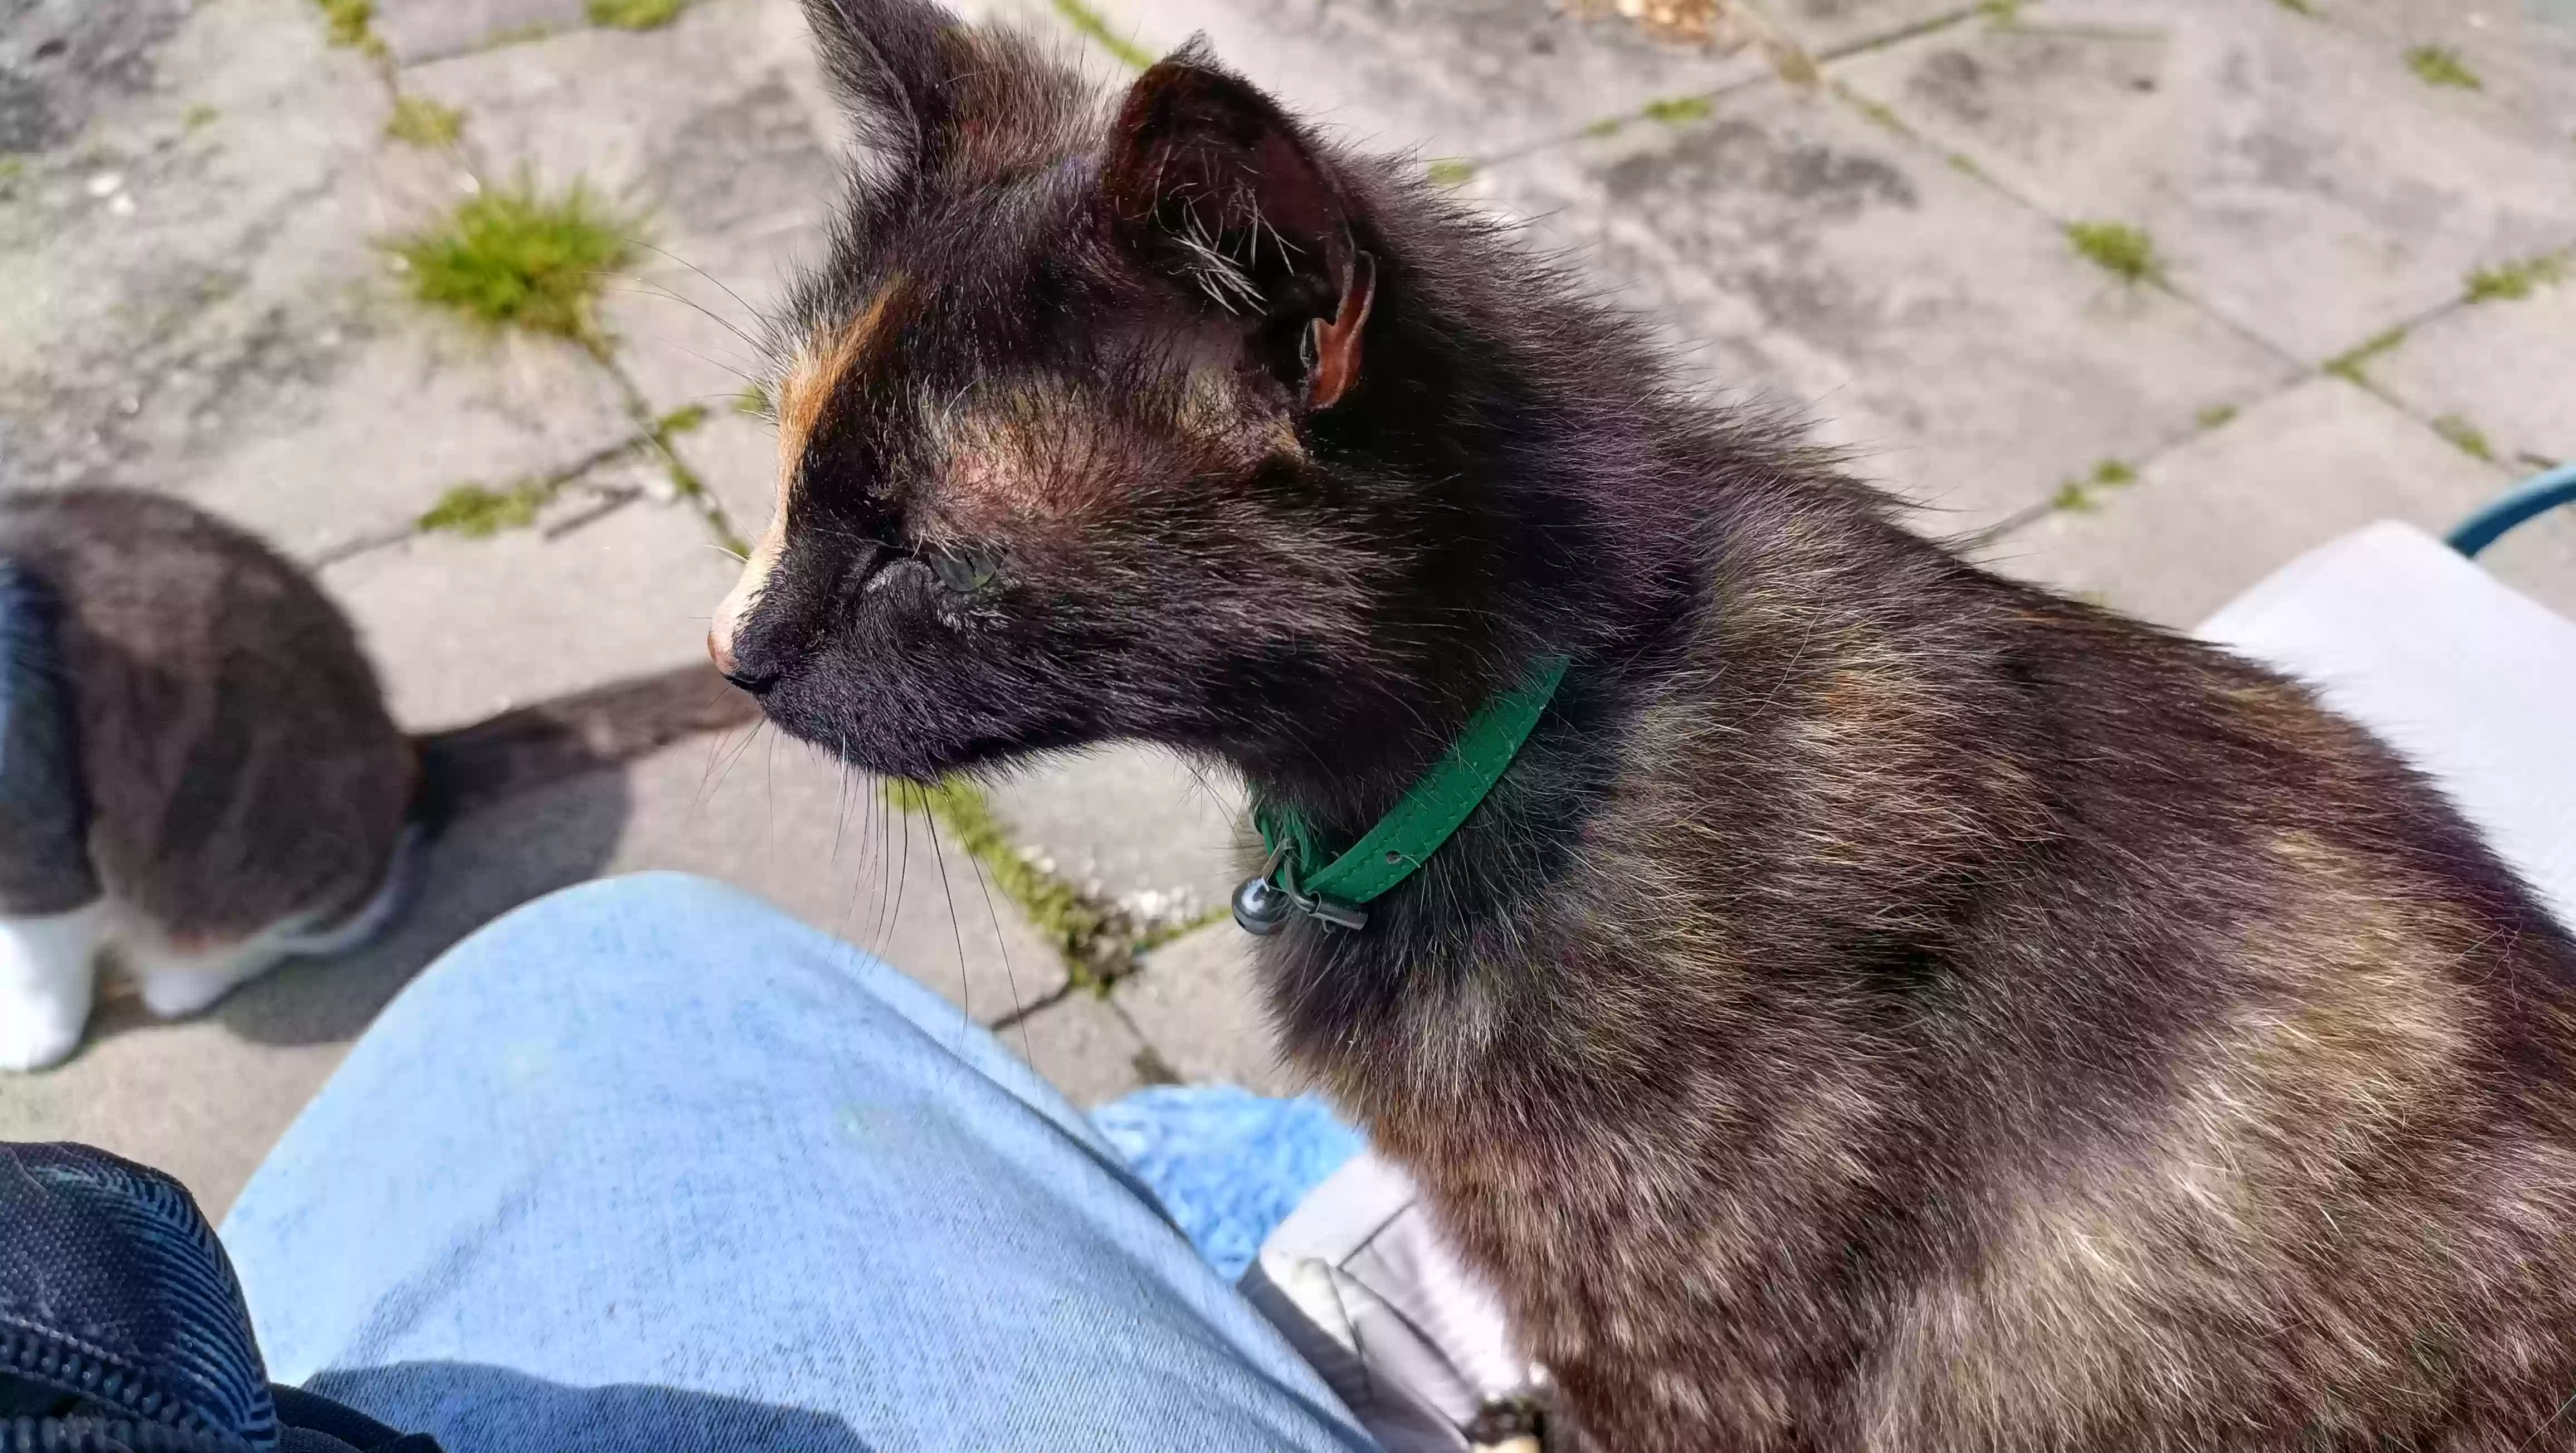 adoptable Cat in Belfast,Northern Ireland named Callie